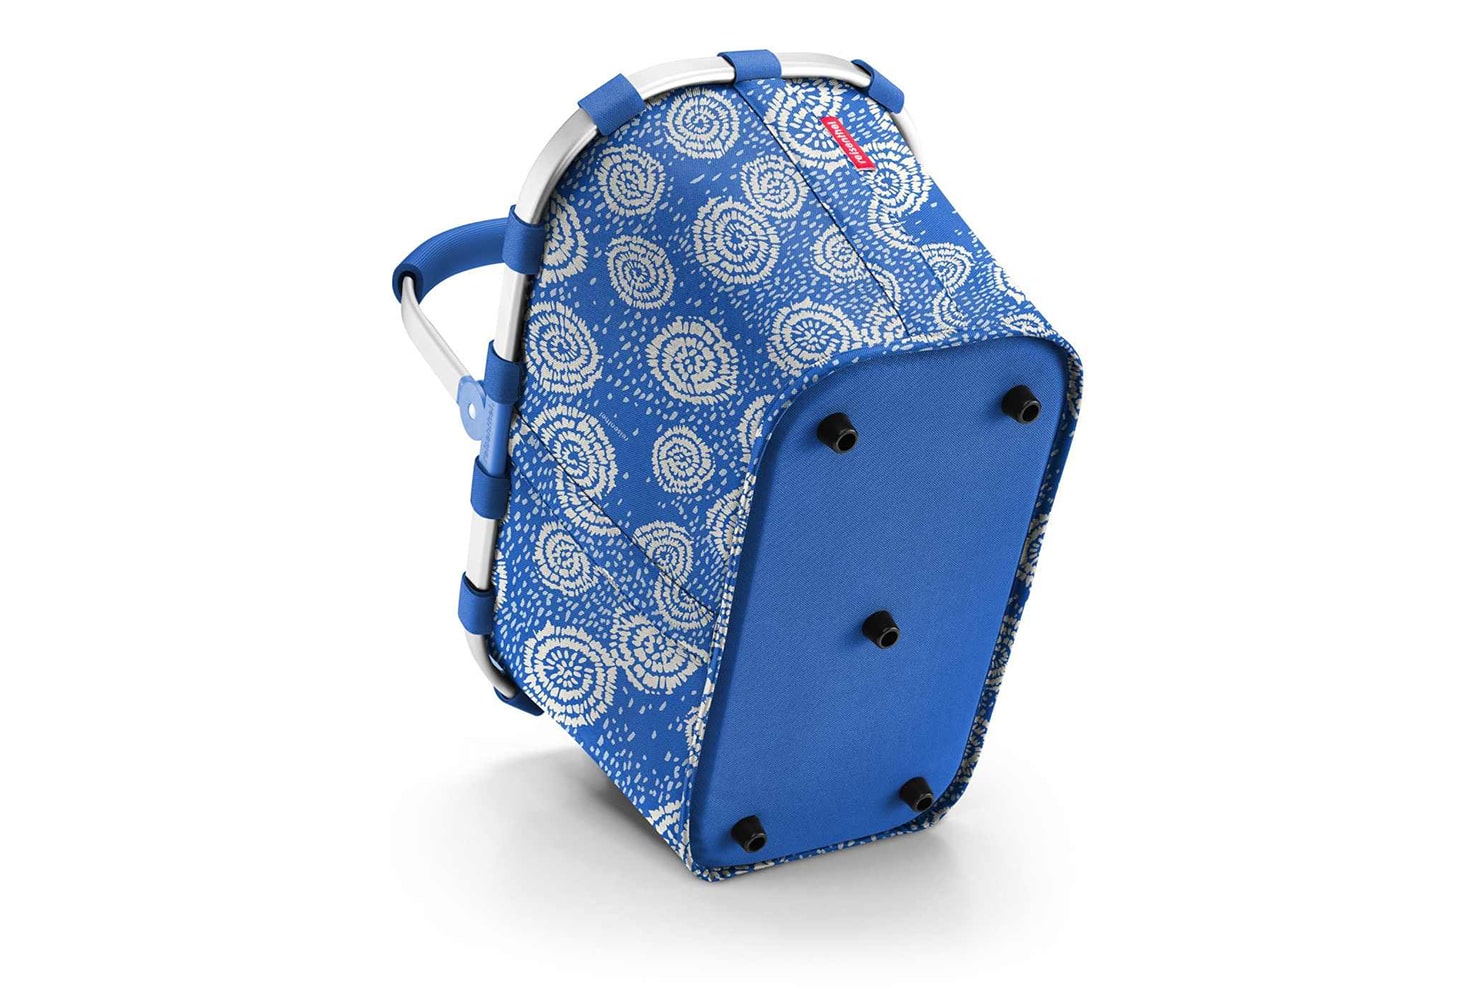 Möbel-Schau Carrybag batik strong blue